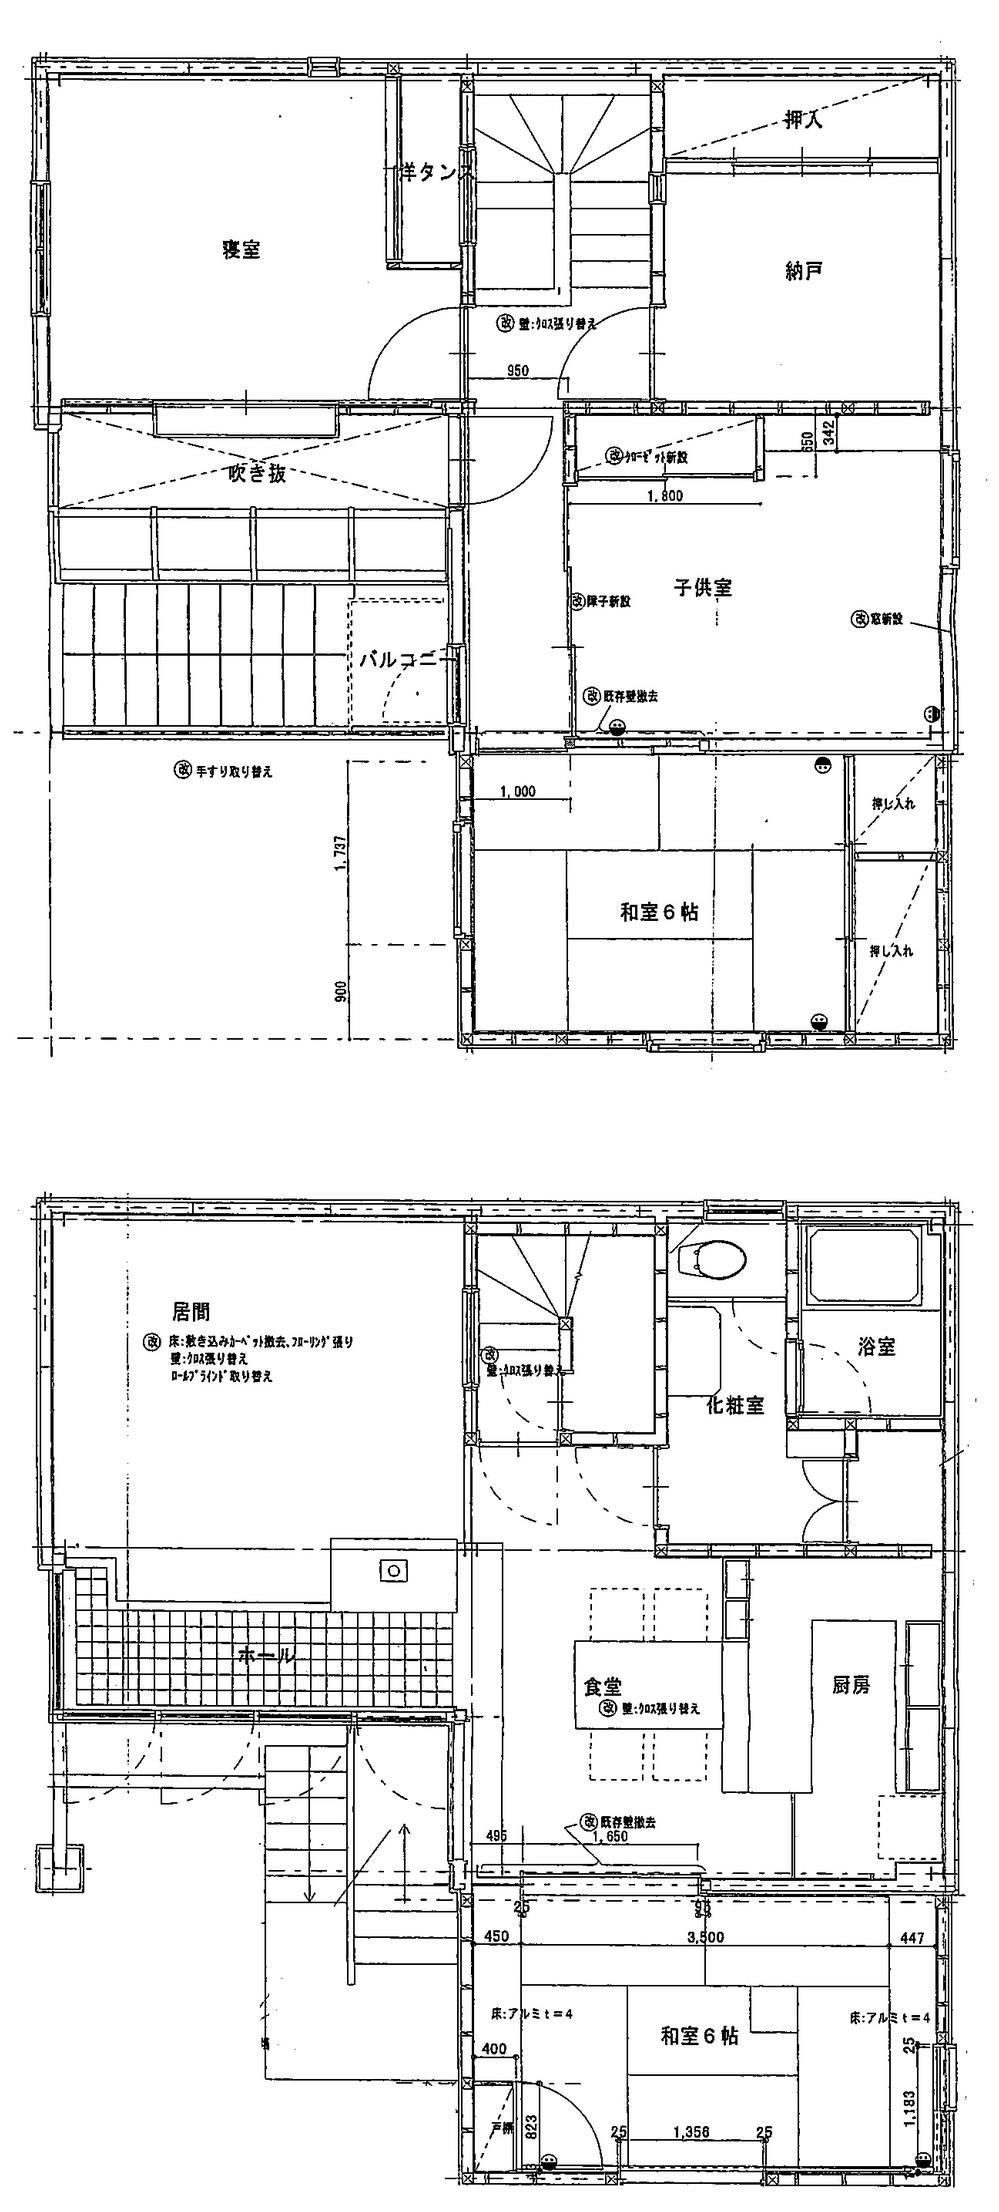 Floor plan. 12 million yen, 4LDK + S (storeroom), Land area 151.3 sq m , Building area 117.31 sq m